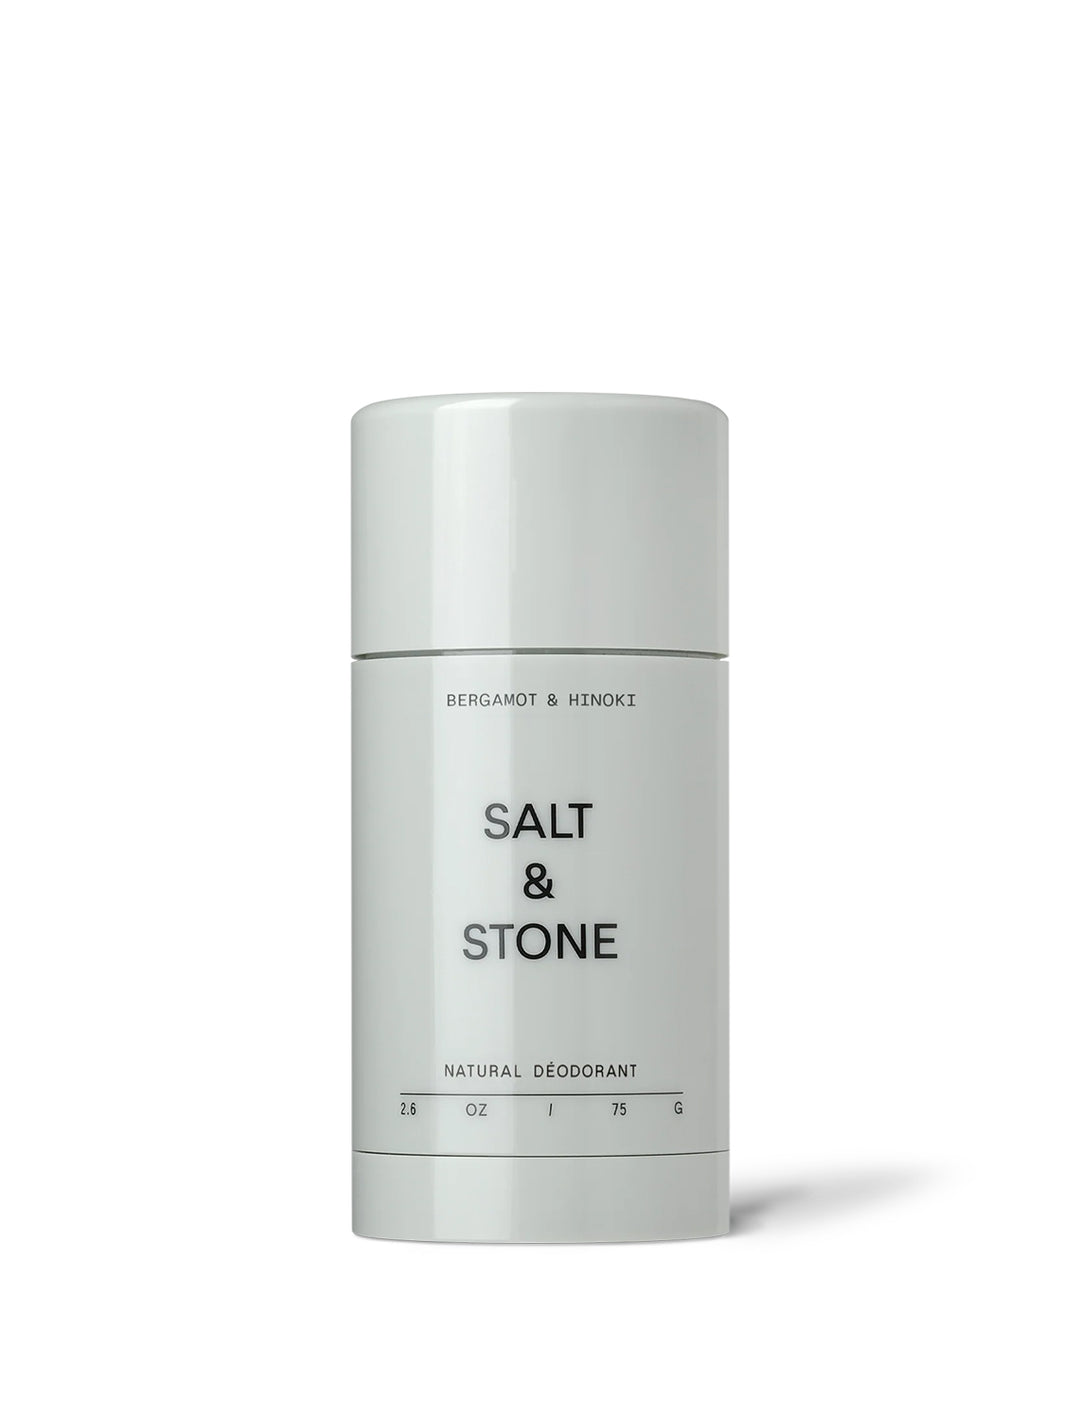 Salt & Stone's natural deoderant - bergamot & hinoki.